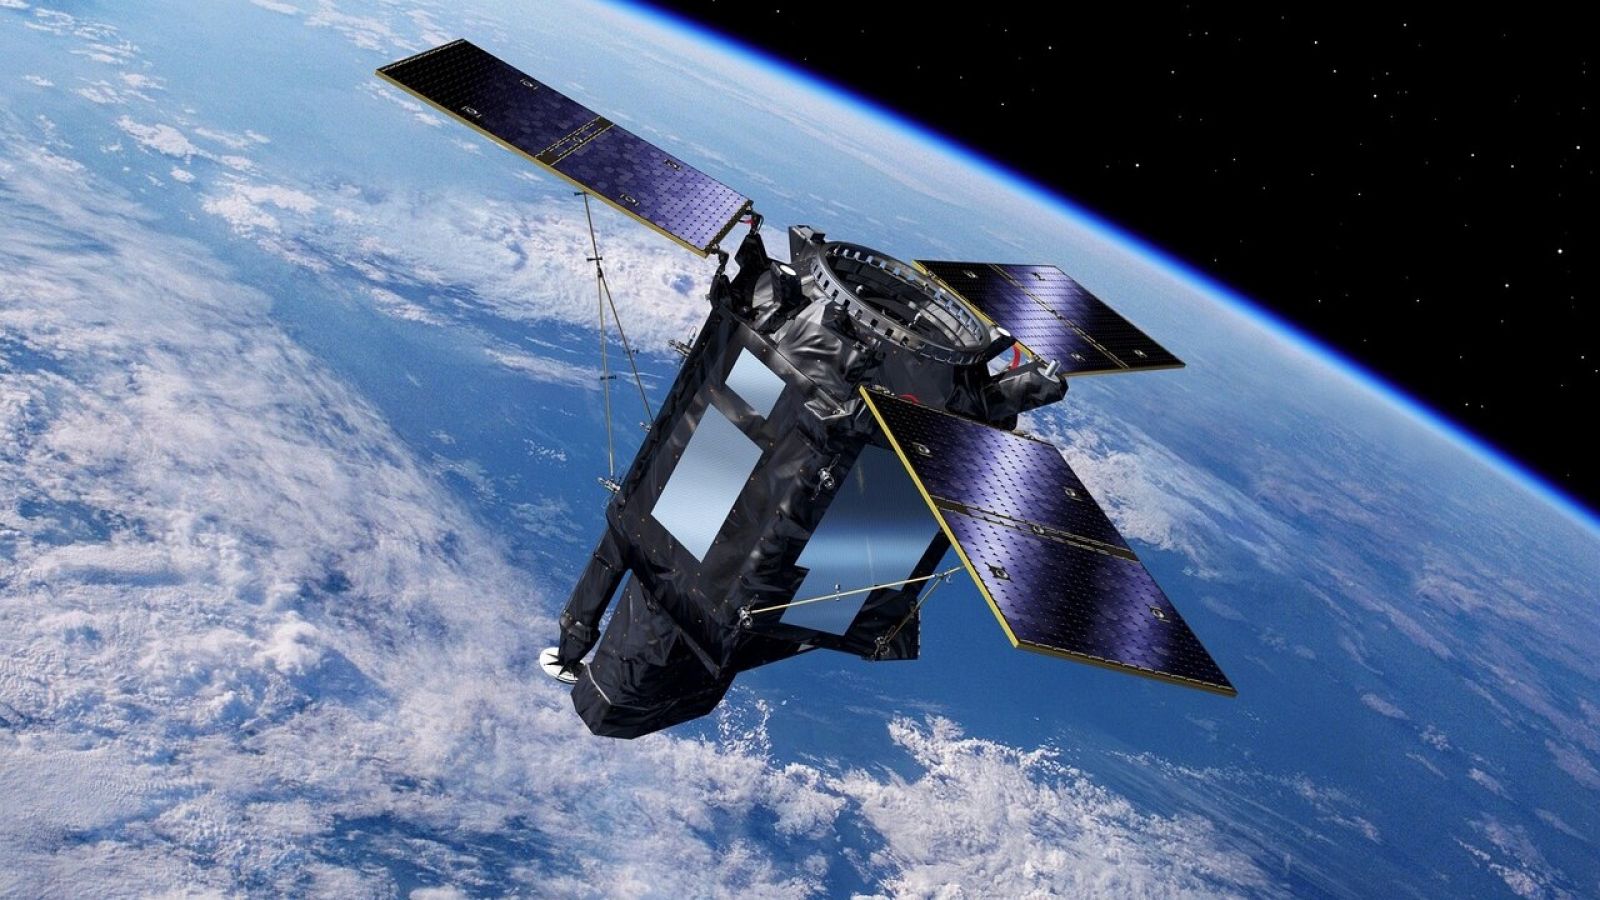 Ilustración facilitada del satélite español Seosat-Ingenio